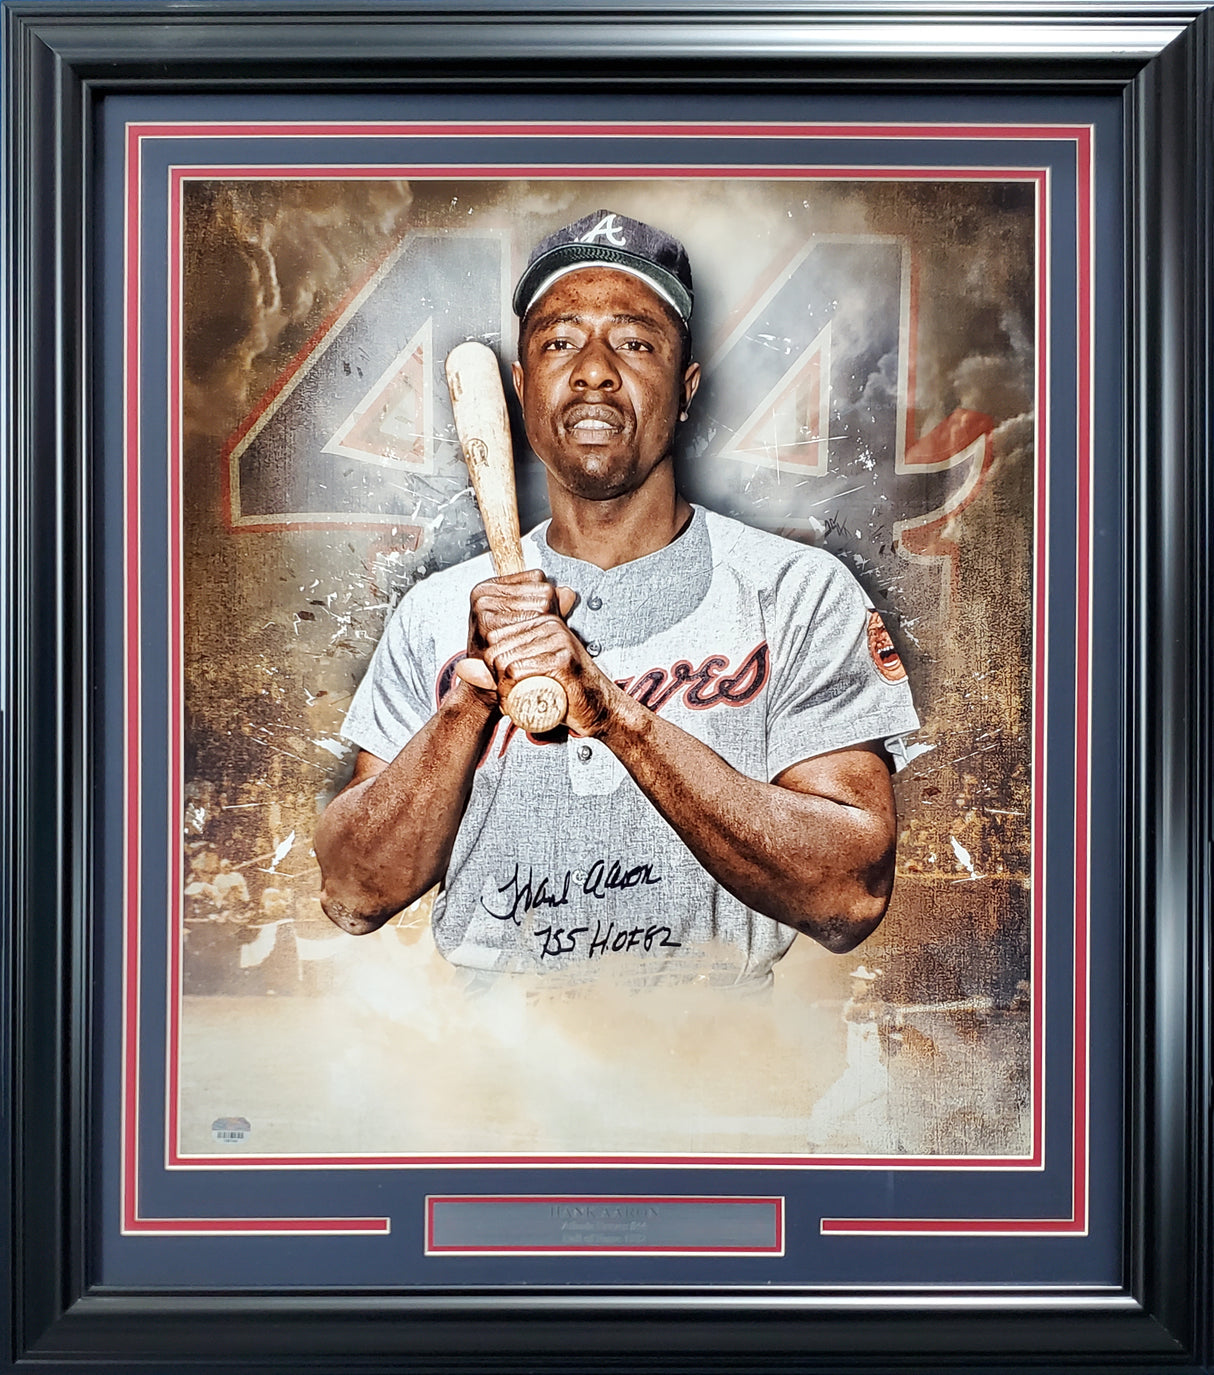 Hank Aaron Autographed Framed 20x24 Photo Atlanta Braves "755 HOF 82" Fanatics Stock #191204